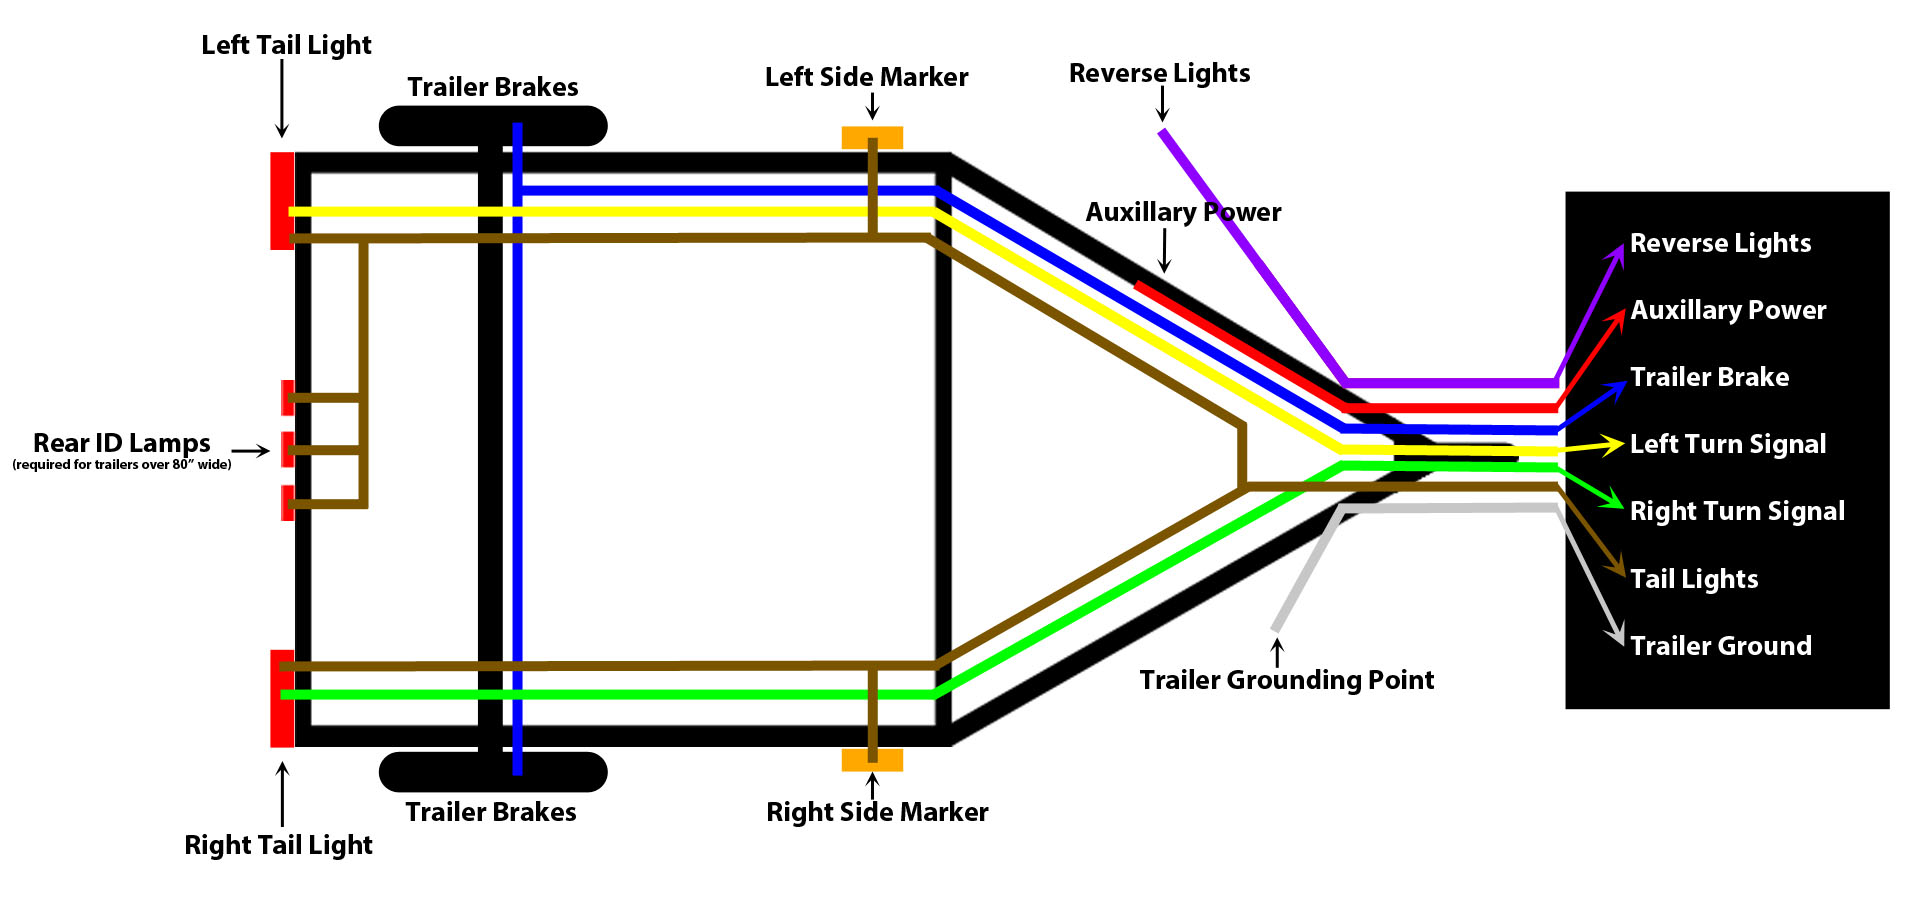 Trailer Brake Light Wiring Diagram from www.therangerstation.com